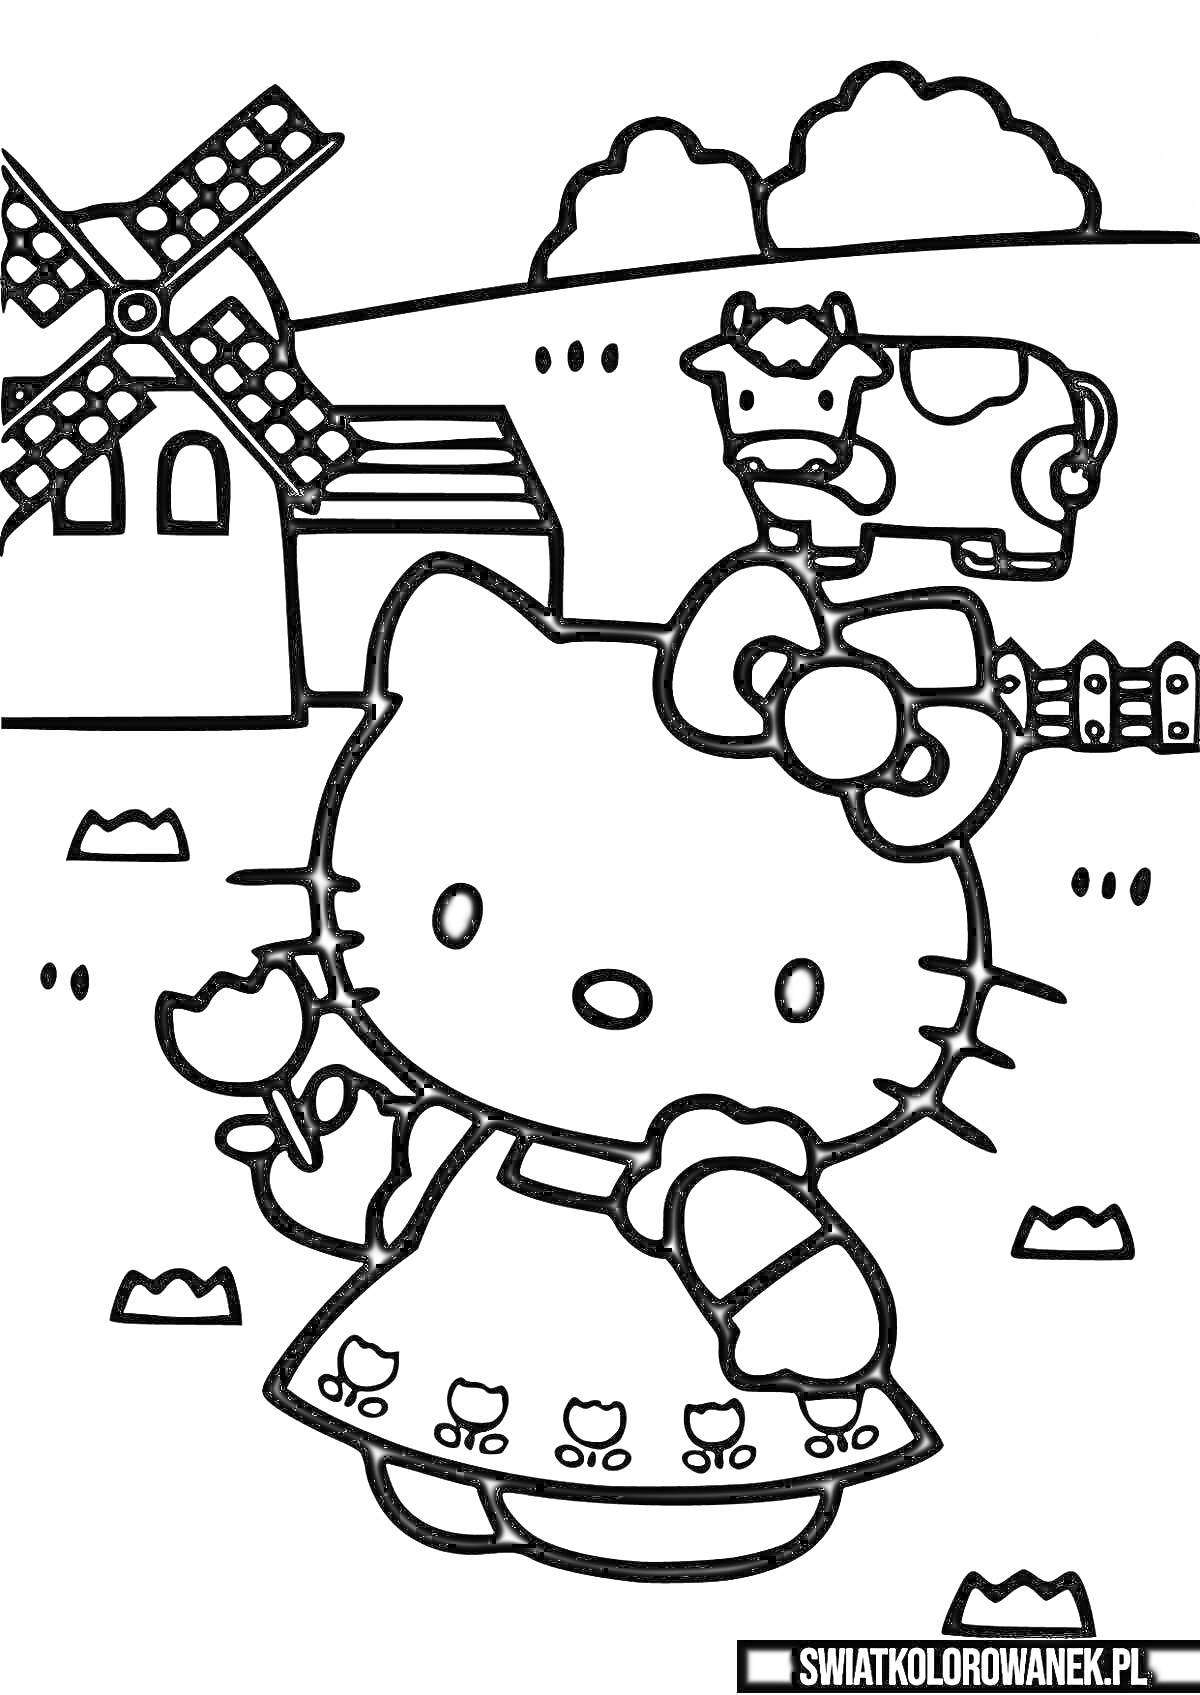 Раскраска Hello Kitty с цветком на ферме, ветеряная мельница, корова, забор и деревья на заднем плане